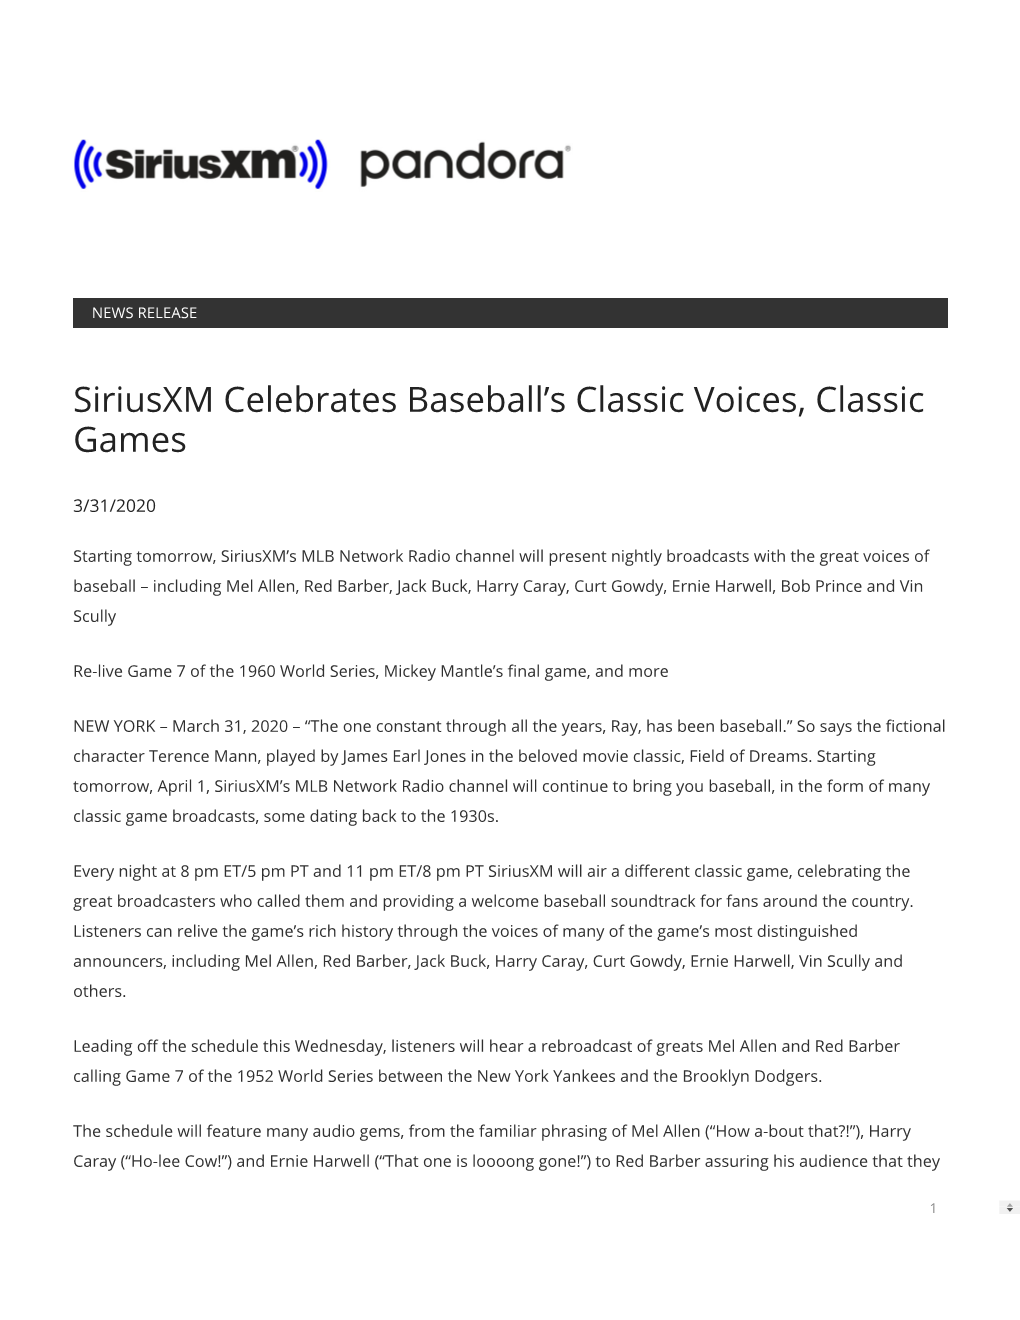 Siriusxm Celebrates Baseball's Classic Voices, Classic Games